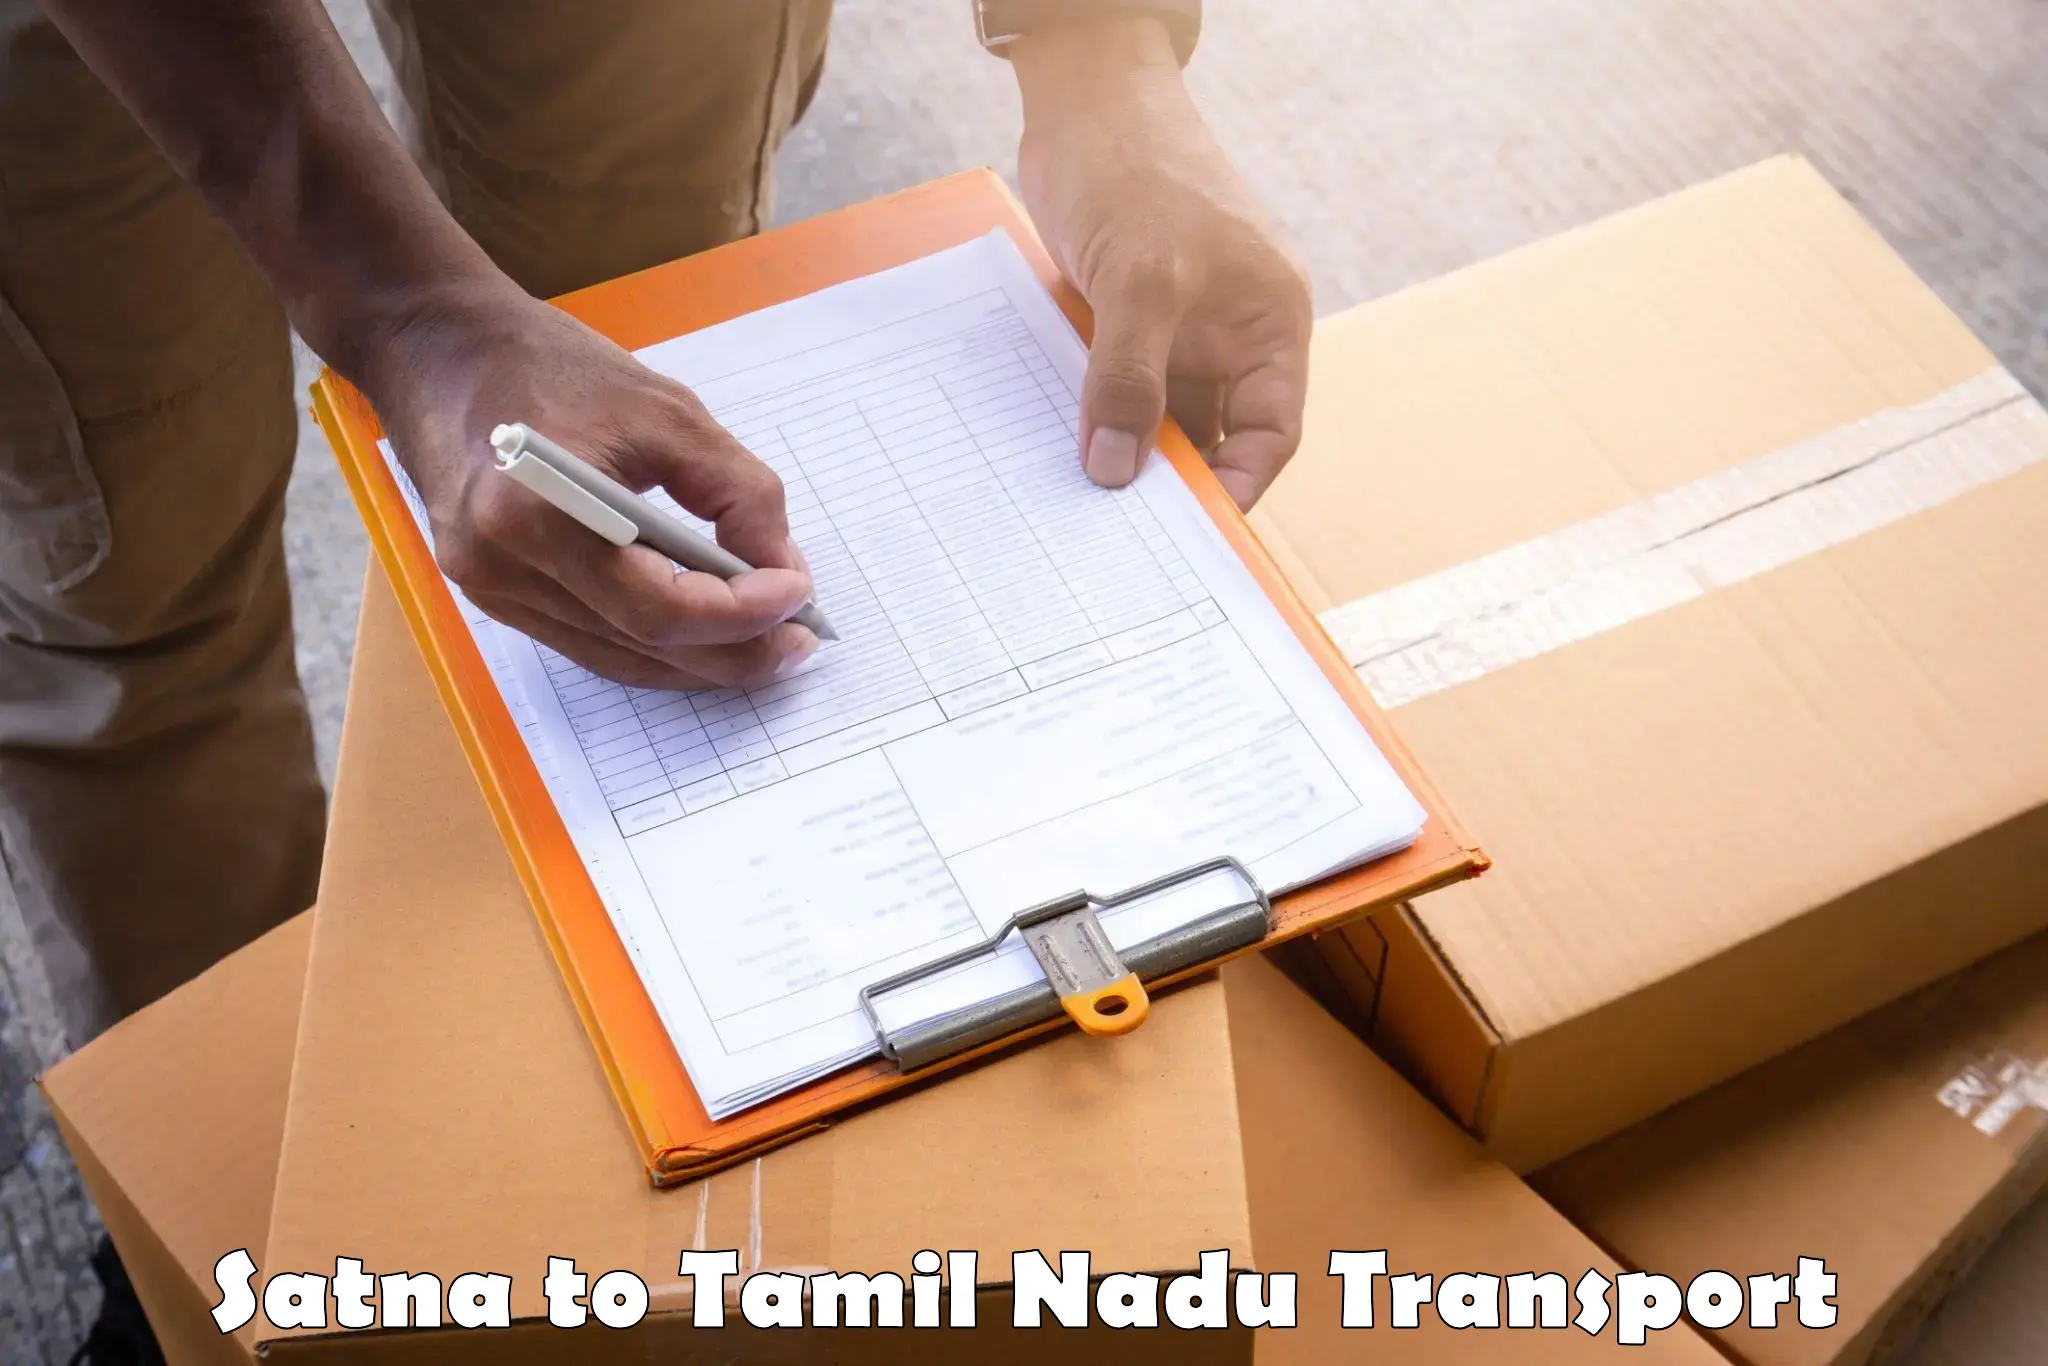 Delivery service Satna to Tirupur